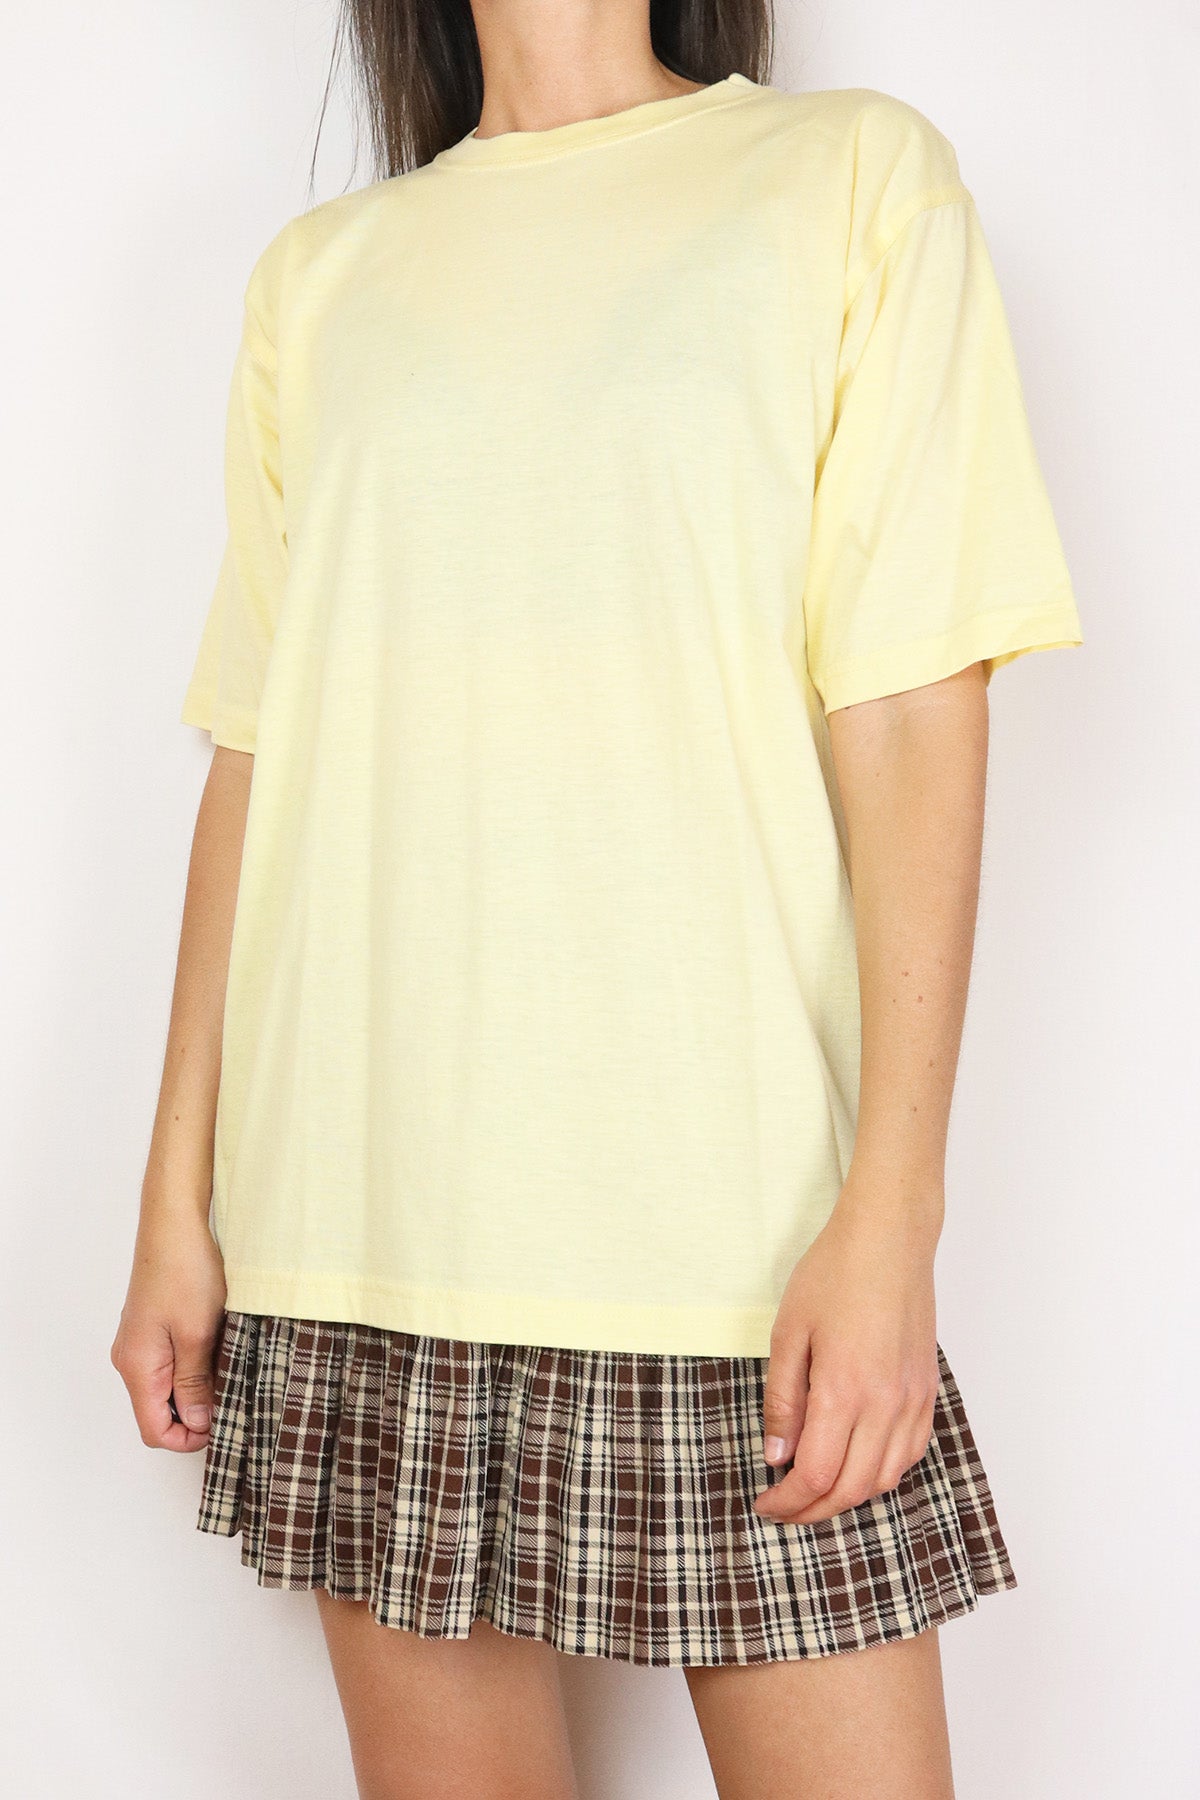 T-Shirt Vintage Pastell gelb ( Gr. S-XL )